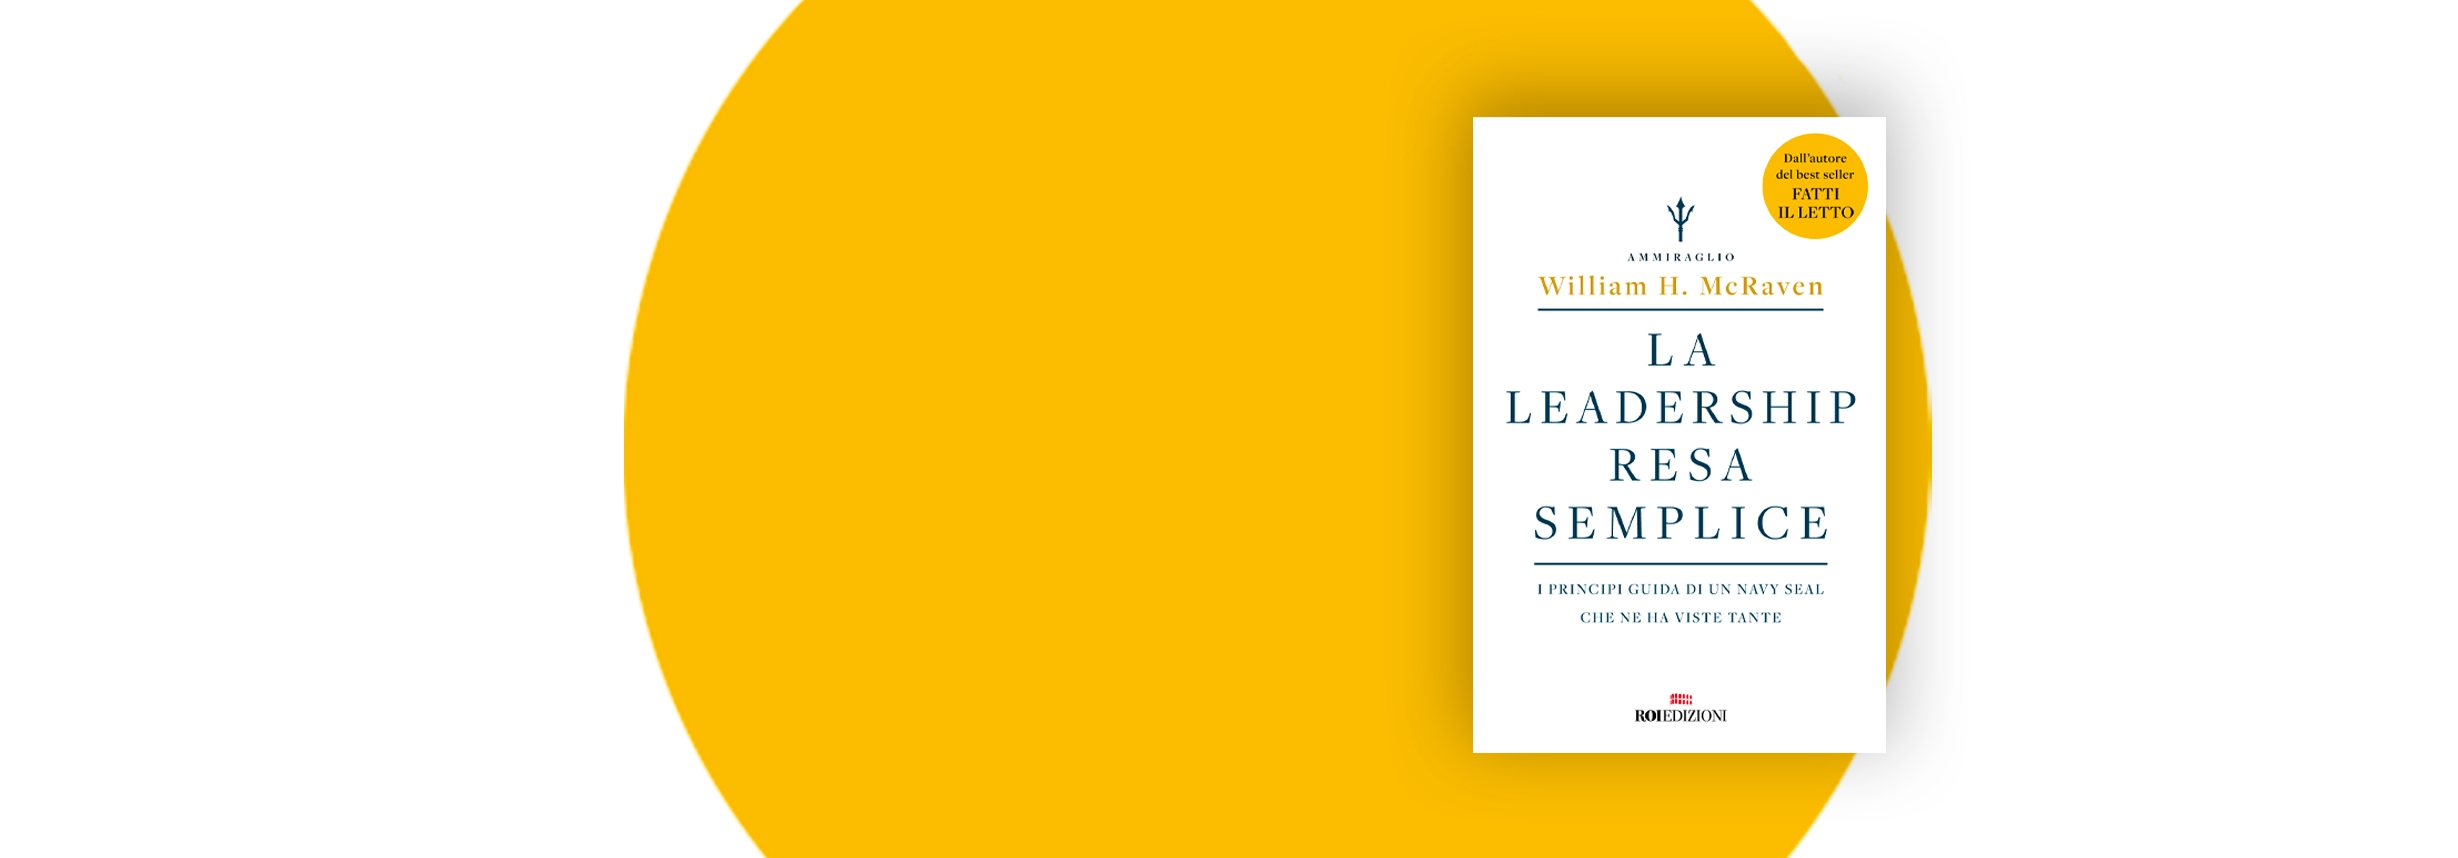 La leadership resa semplice, William H. McRaven